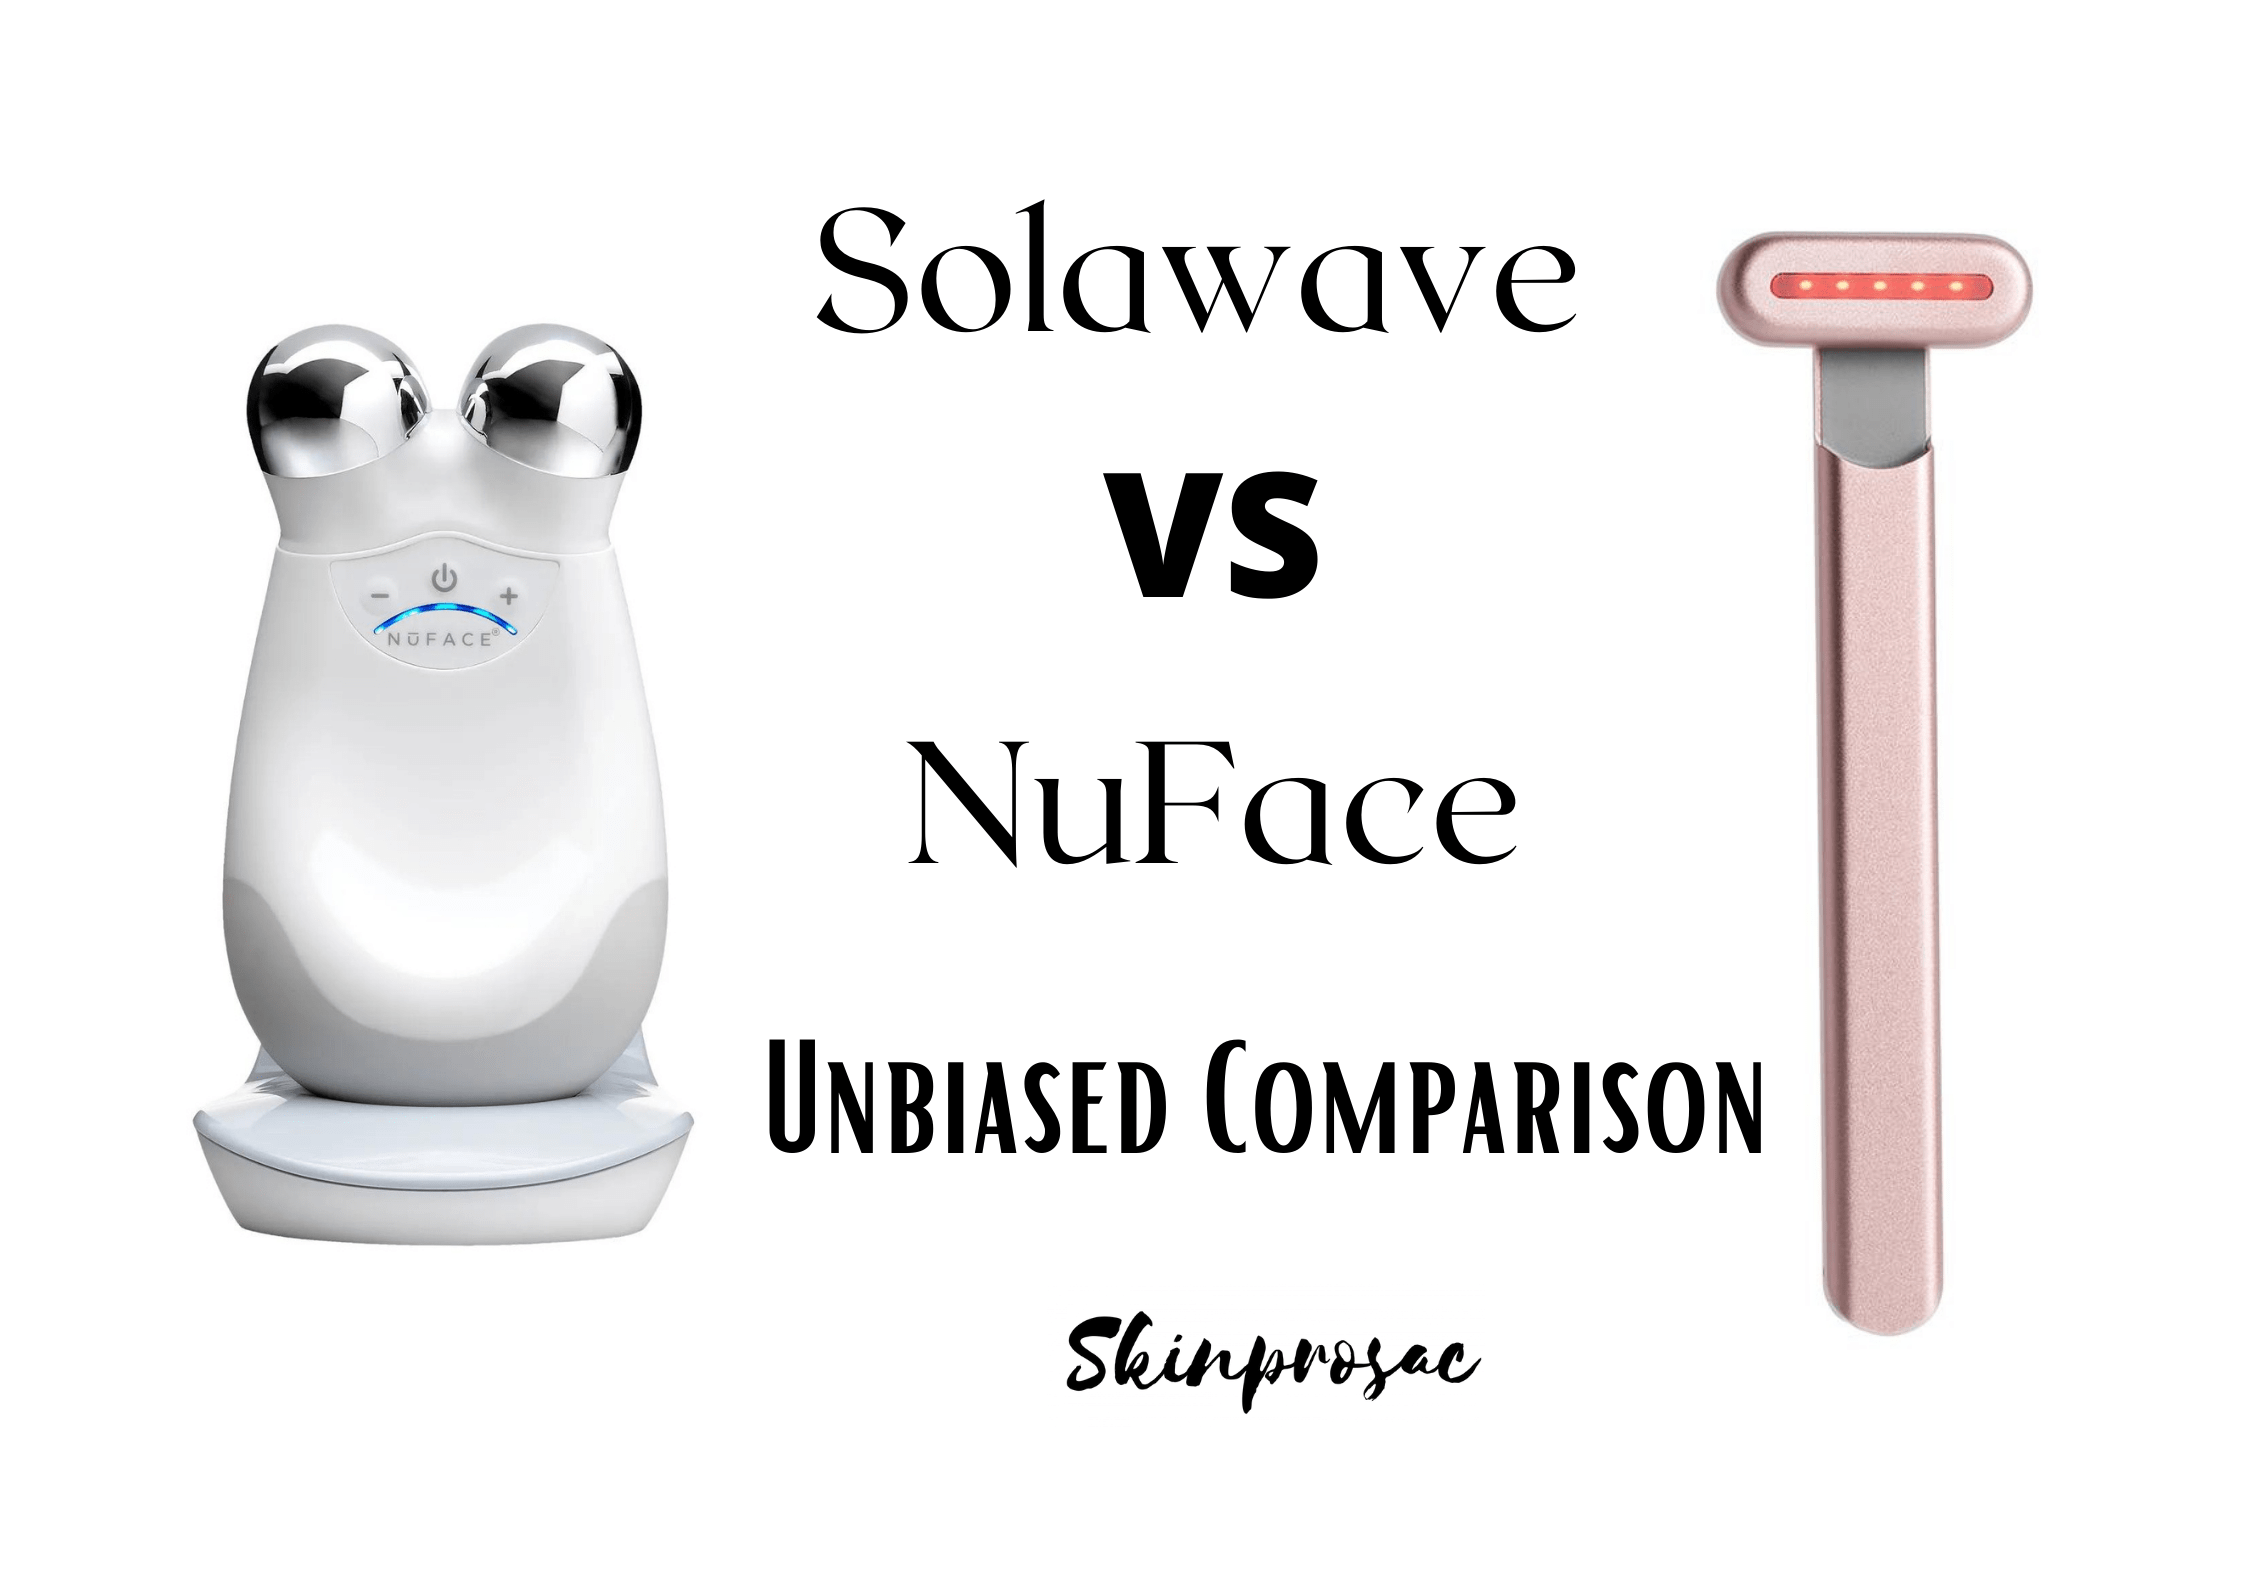 Solawave VS Nuface